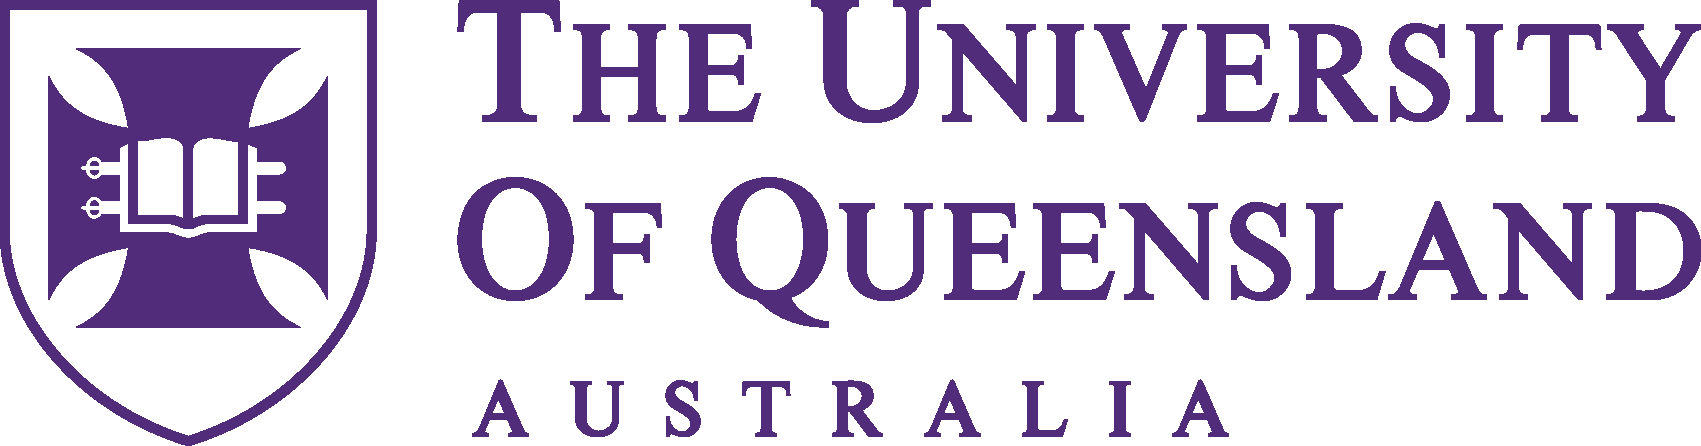 Research plots a collaborative future for river Nile biodiversity - UQ News  - The University of Queensland, Australia